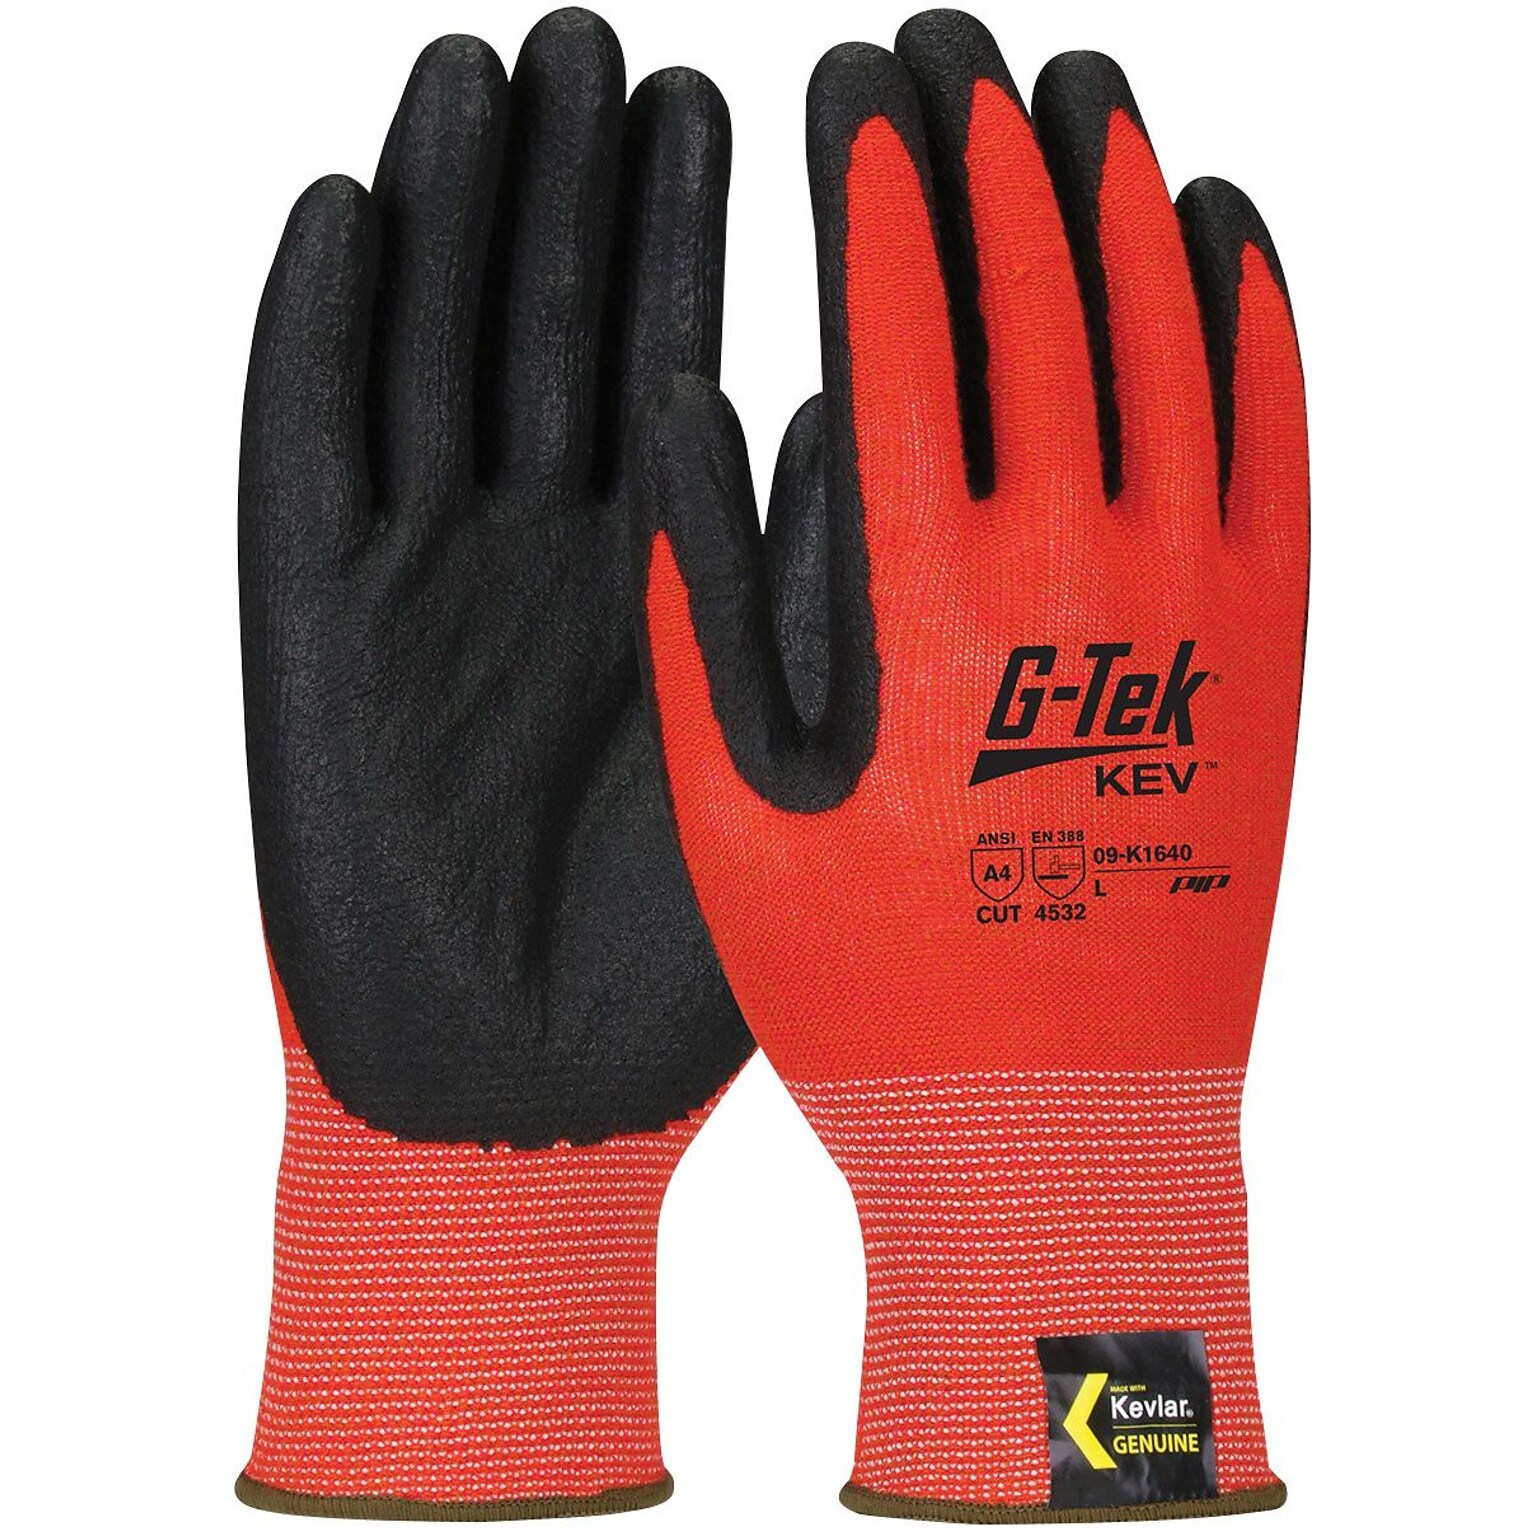 G-Tek KEV Nitrile Foam Work Gloves, Kevlar Engineered Yarn, Red, Medium, 1 Pair (09-K1640/M)